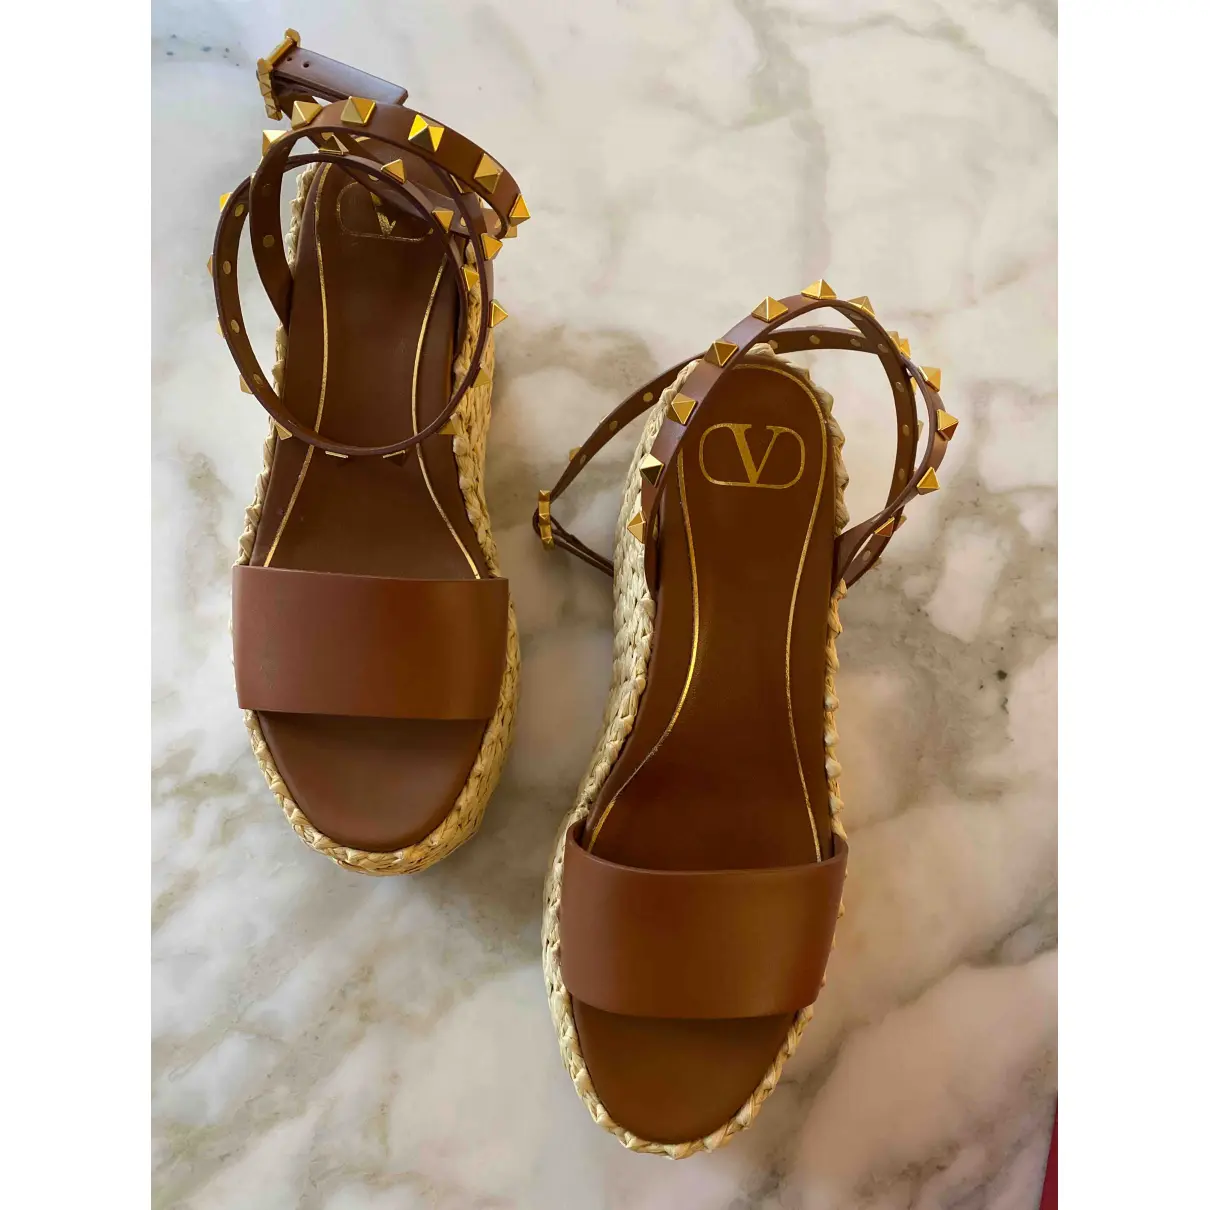 Buy Valentino Garavani Rockstud leather sandals online